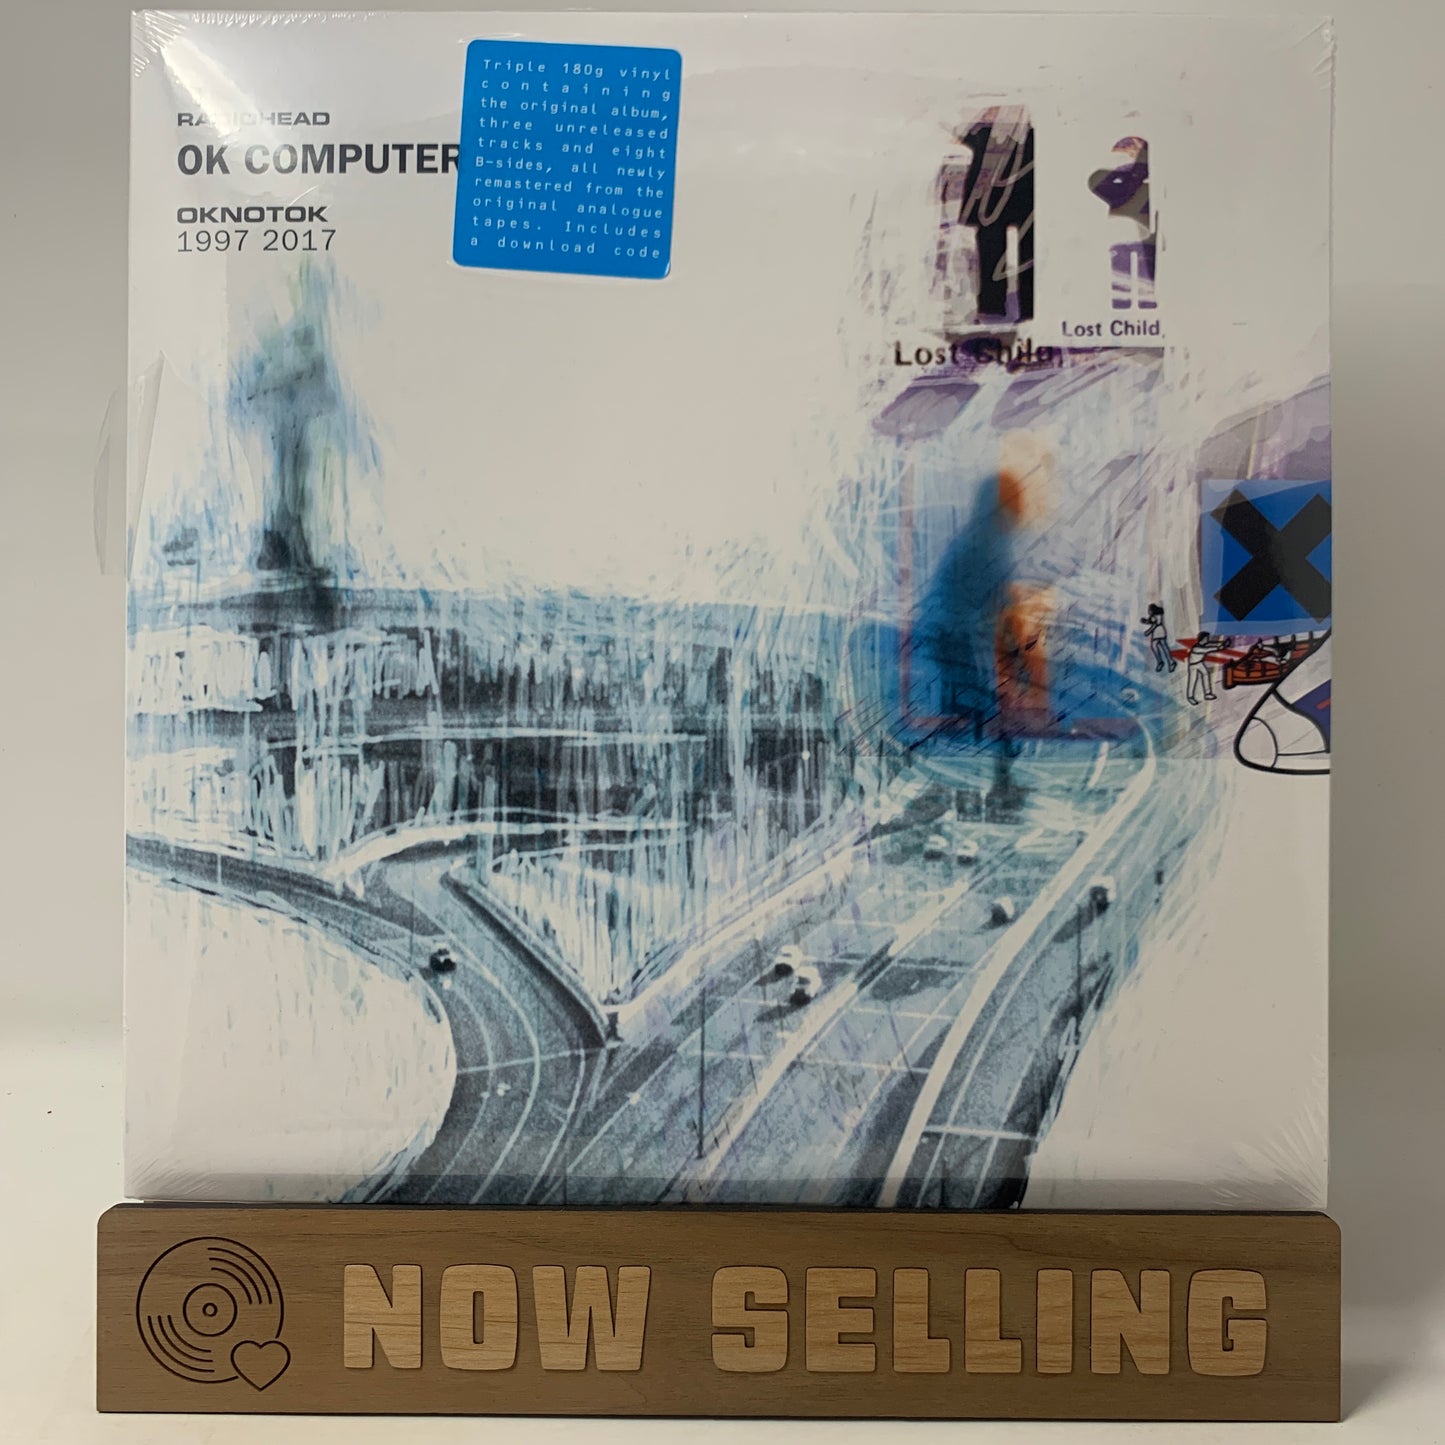 Radiohead - OK Computer OKNOTOK 1997 2017 Vinyl LP SEALED